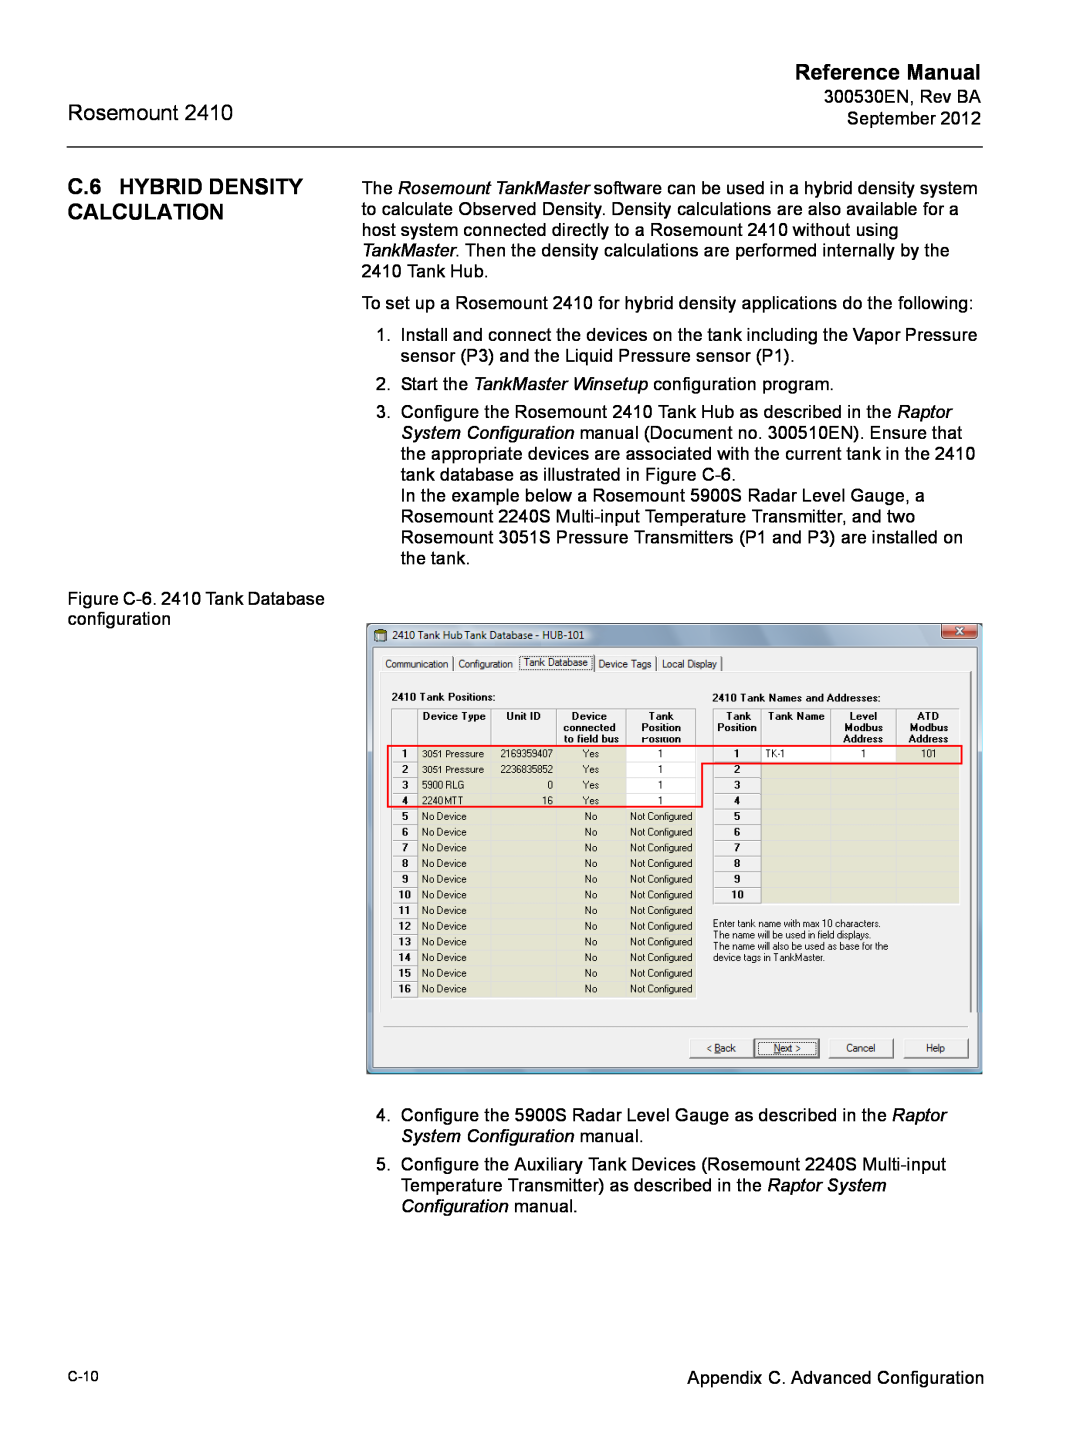 Emerson Process Management Rosemount 2410 manual C.6 HYBRID DENSITY CALCULATION, Reference Manual, C-10 